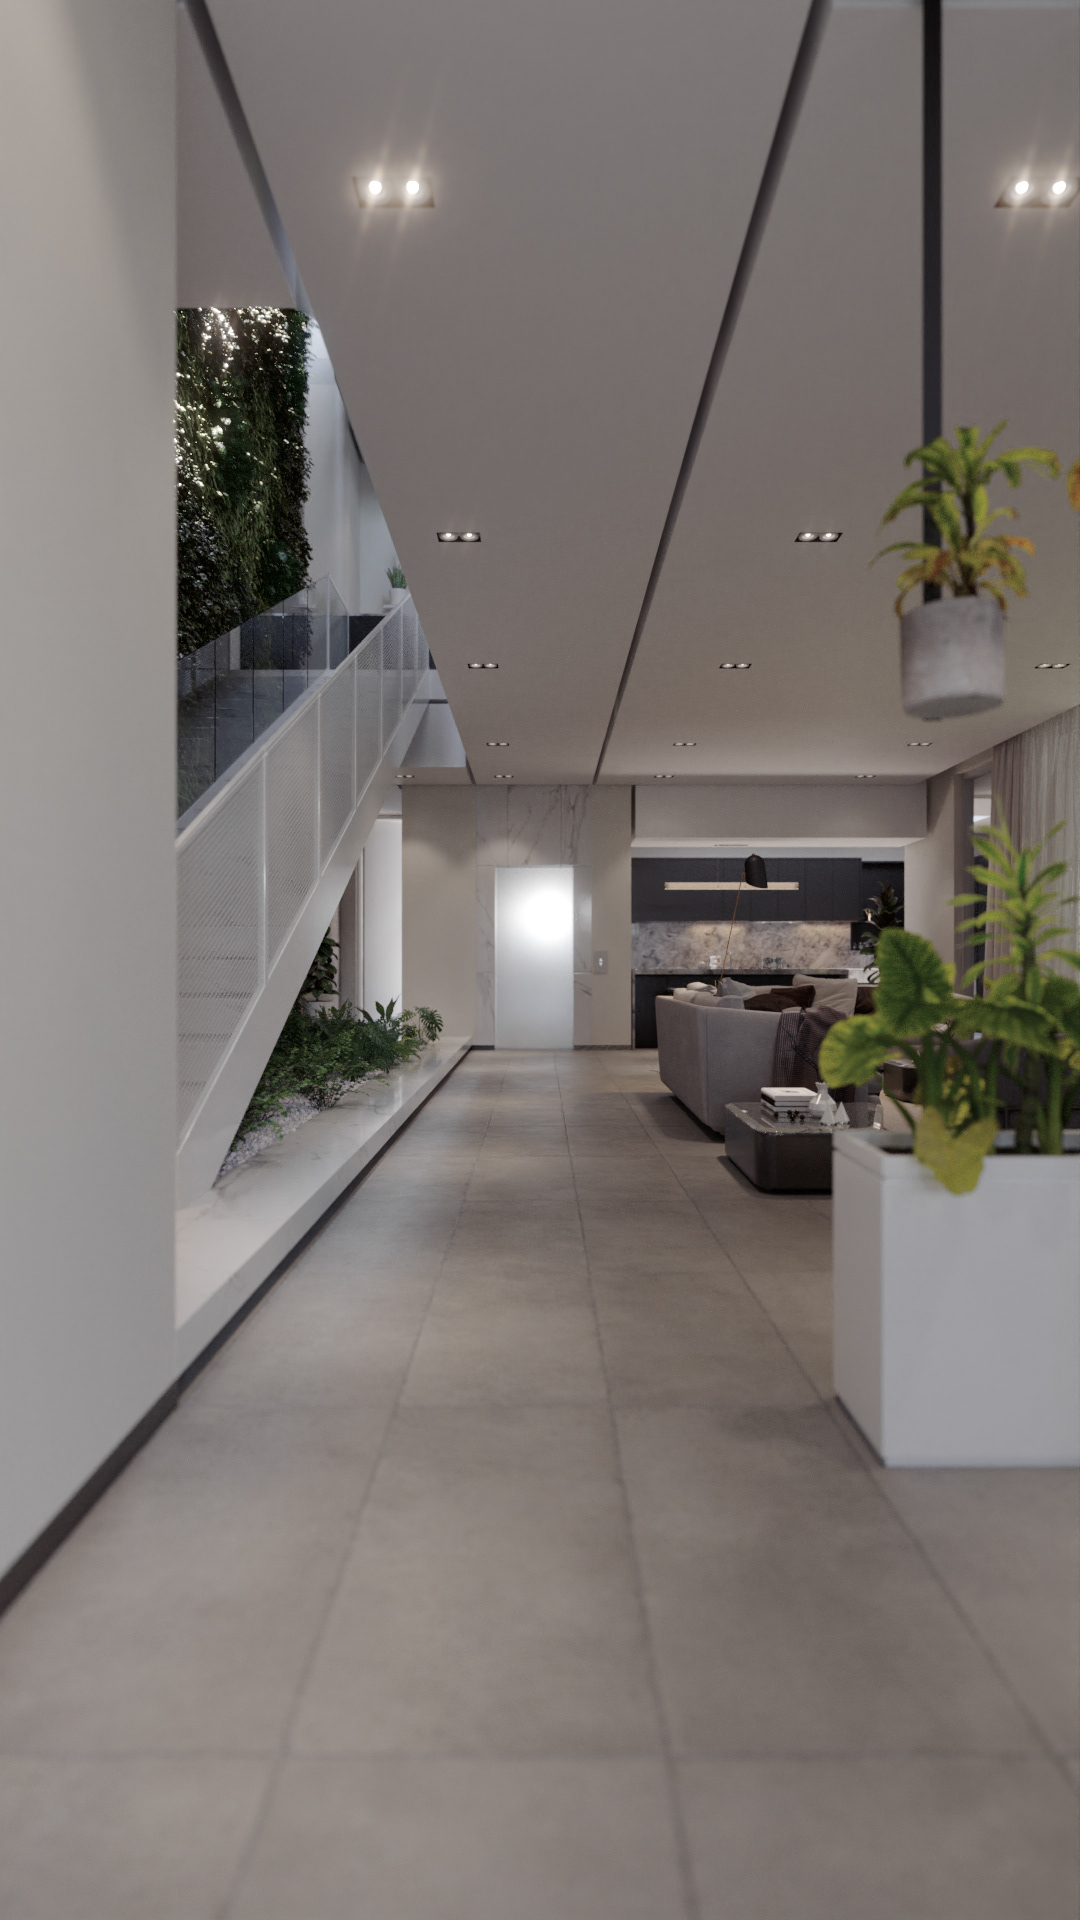 3ds max archtecture interior design  Landscape matirial